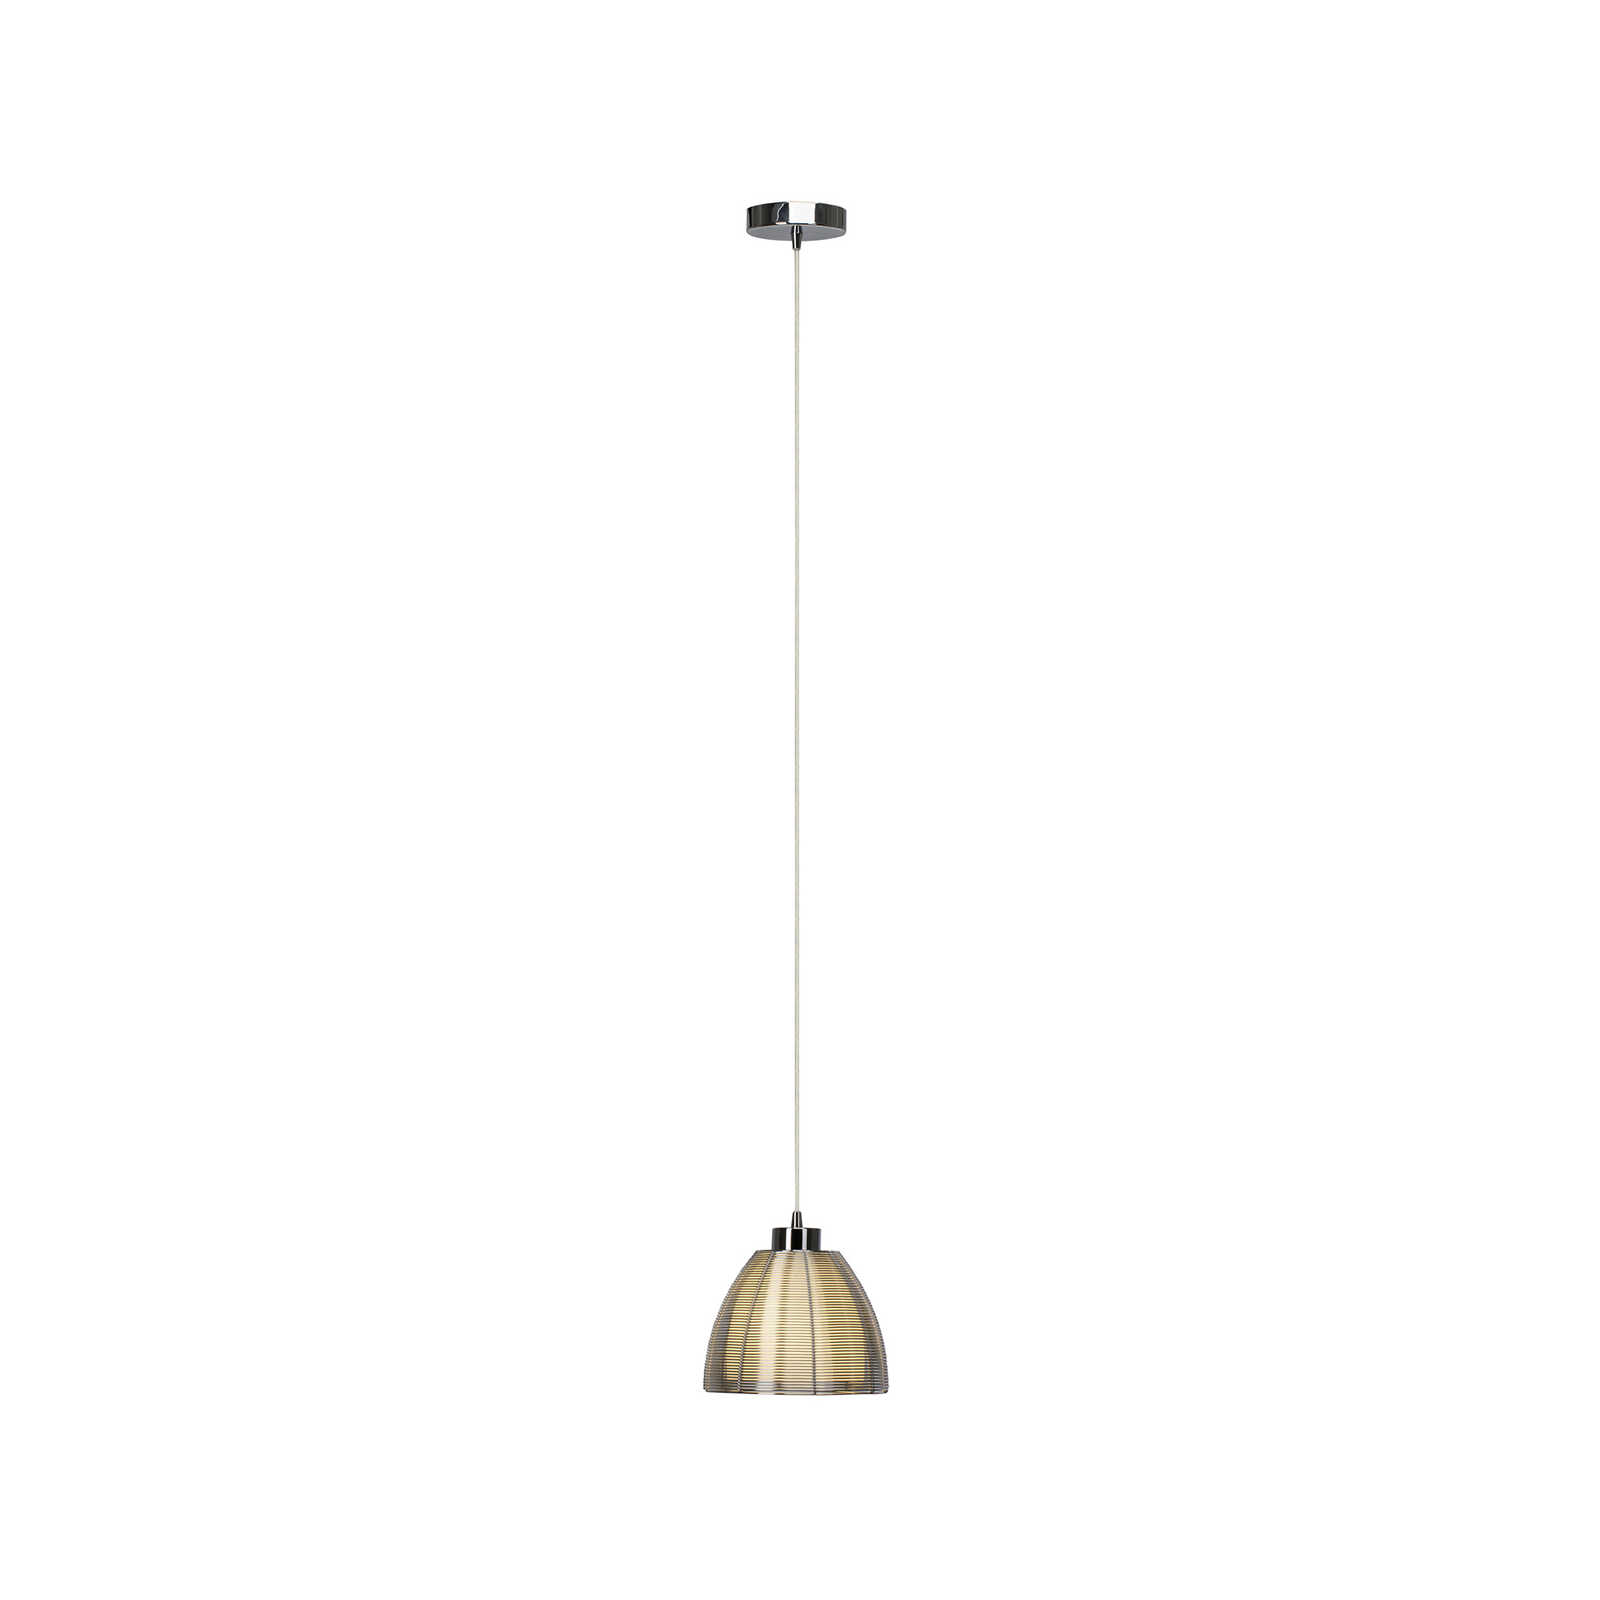 Glazen hanglamp - Maxime 1 - Metallic
